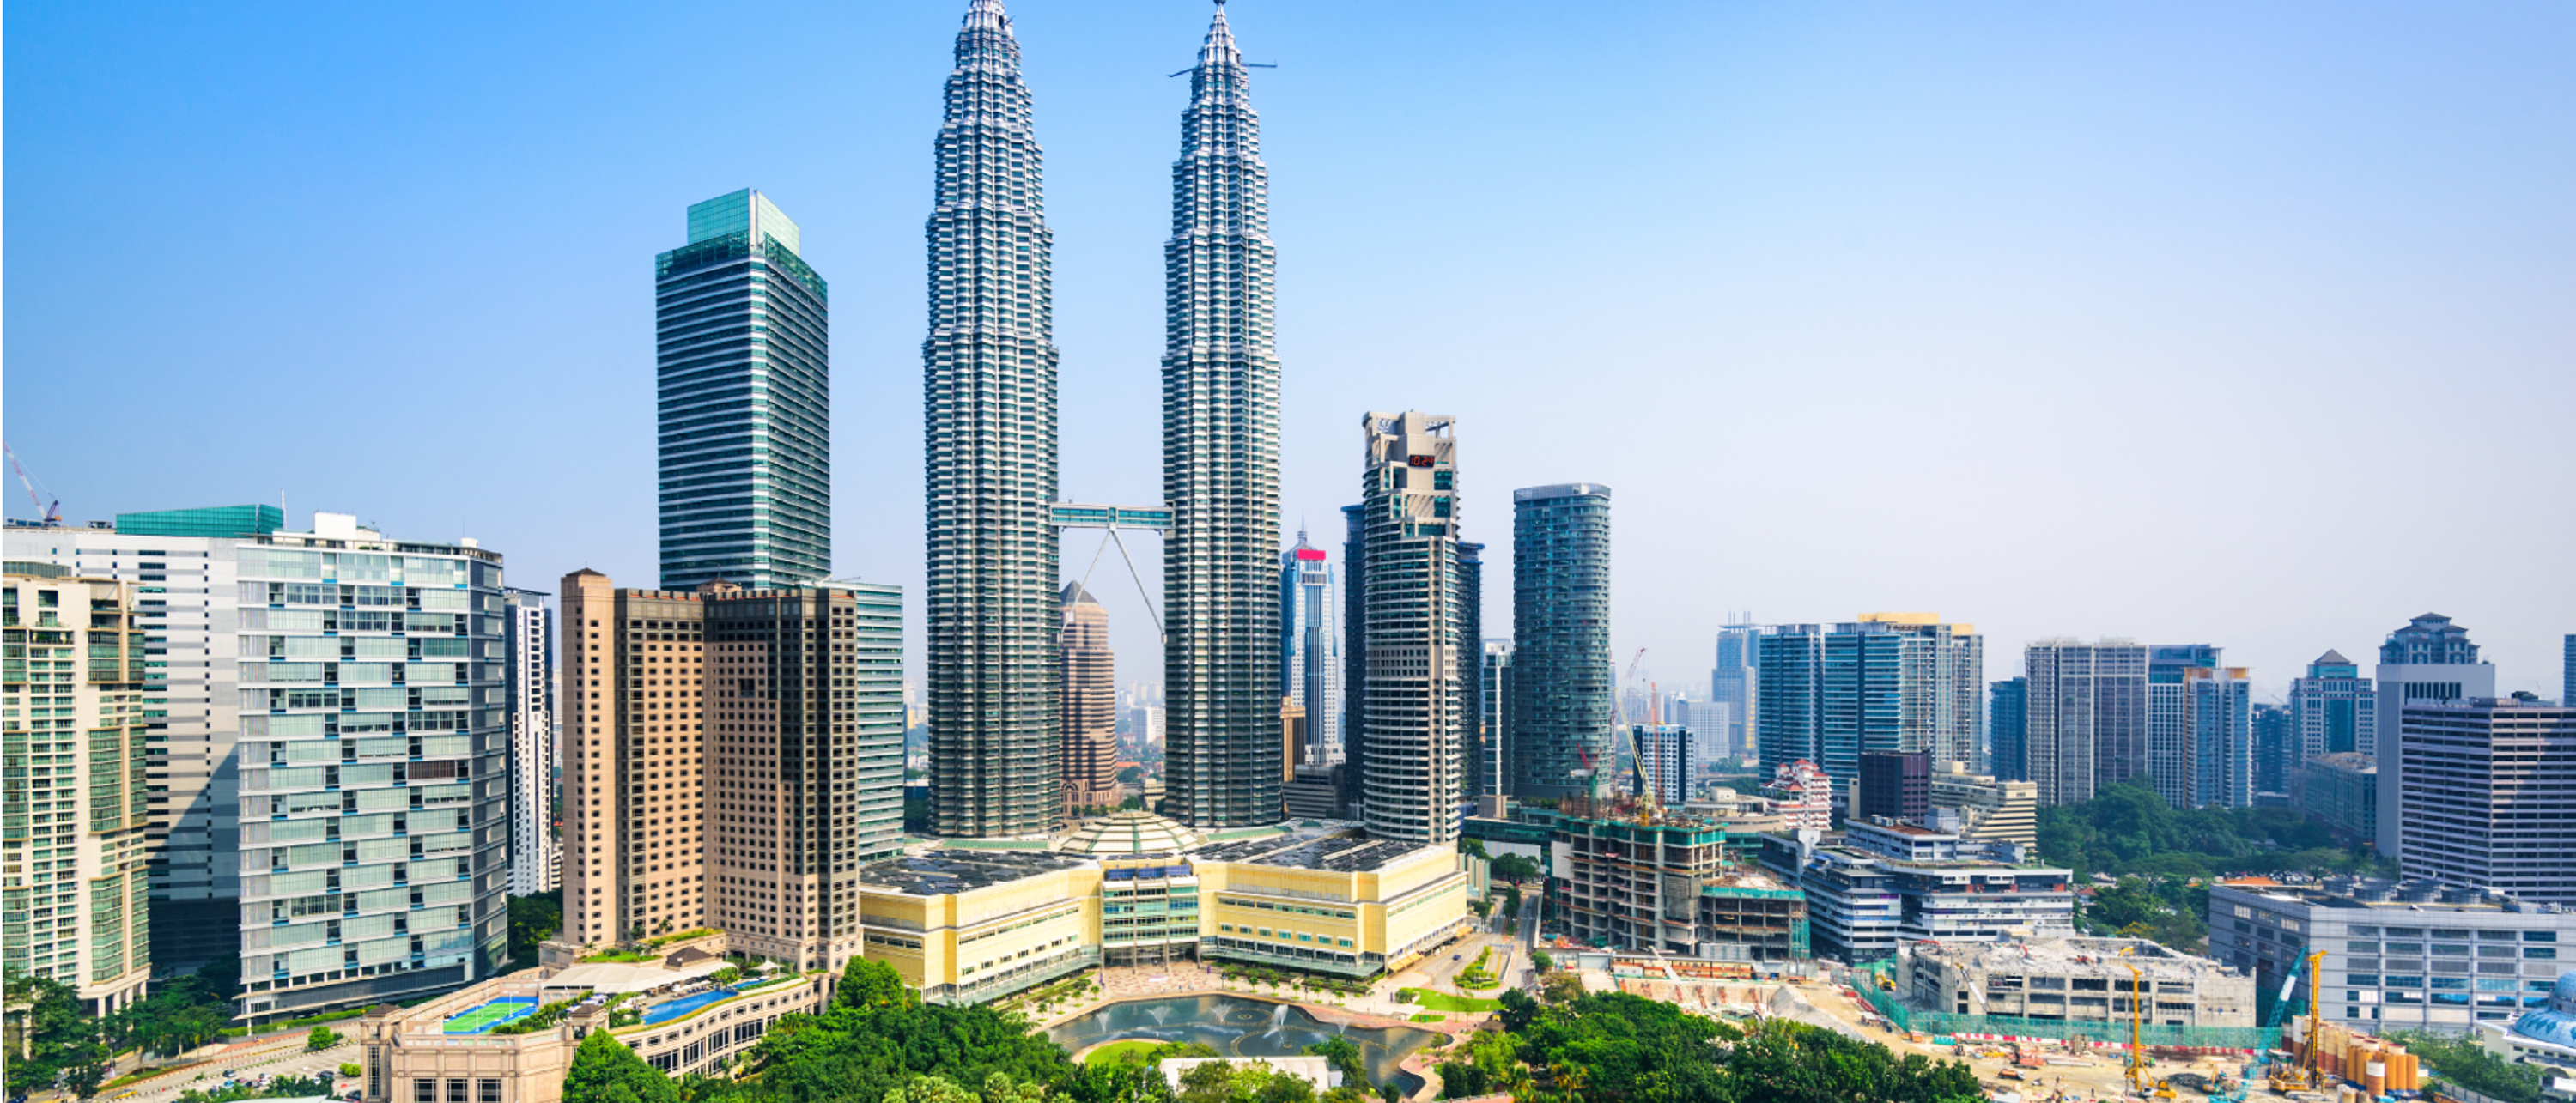 Image of buildings in Kuala Lumpur